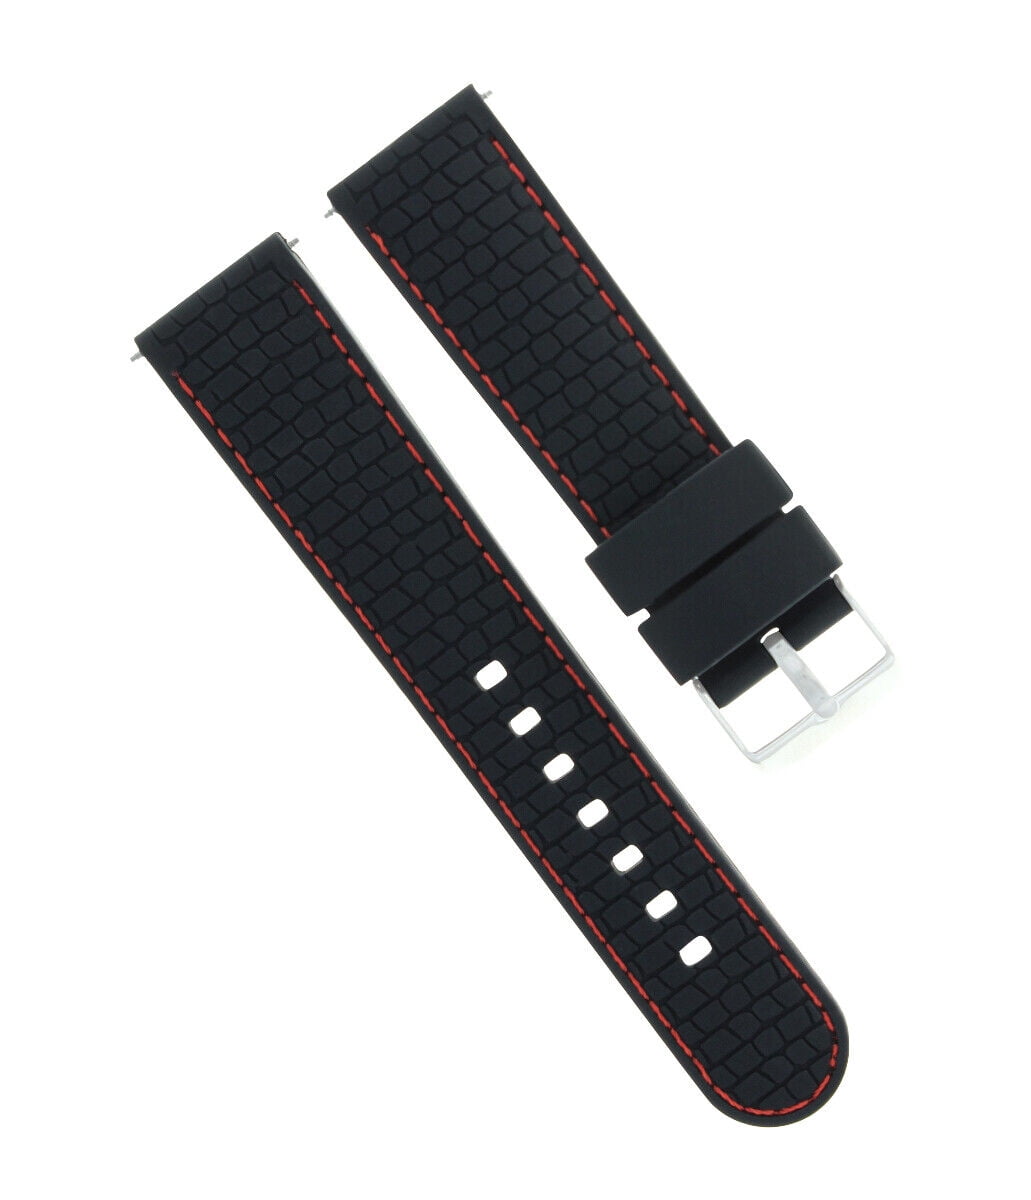 Archer Watch Straps - Some new straps for the seiko skx thanks to